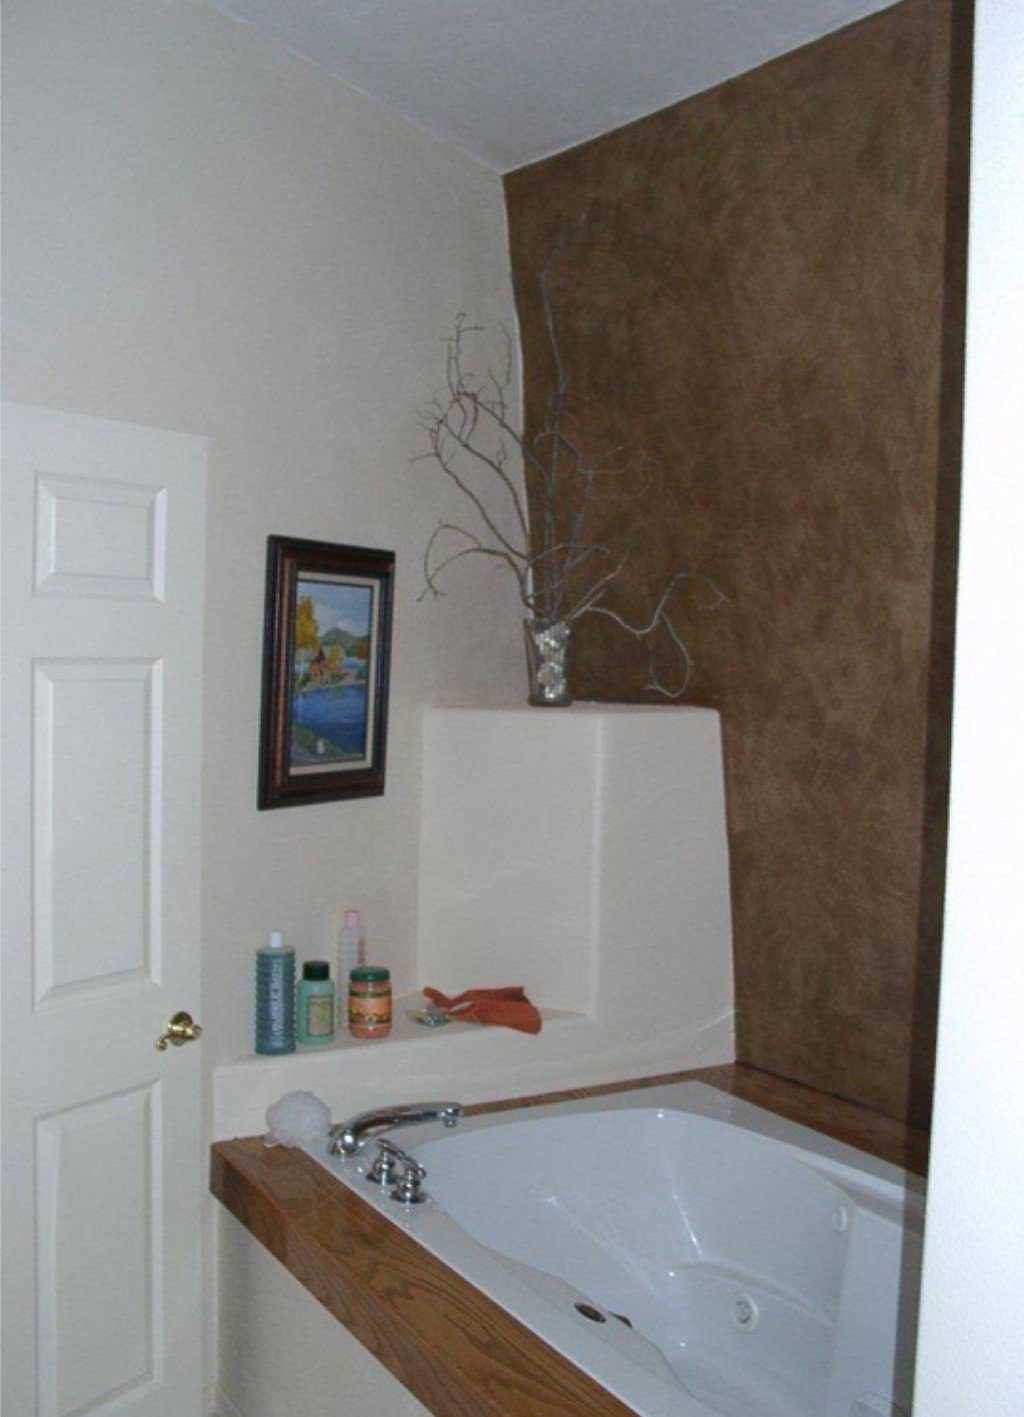 Bath time — This suite includes a Jacuzzi tub.